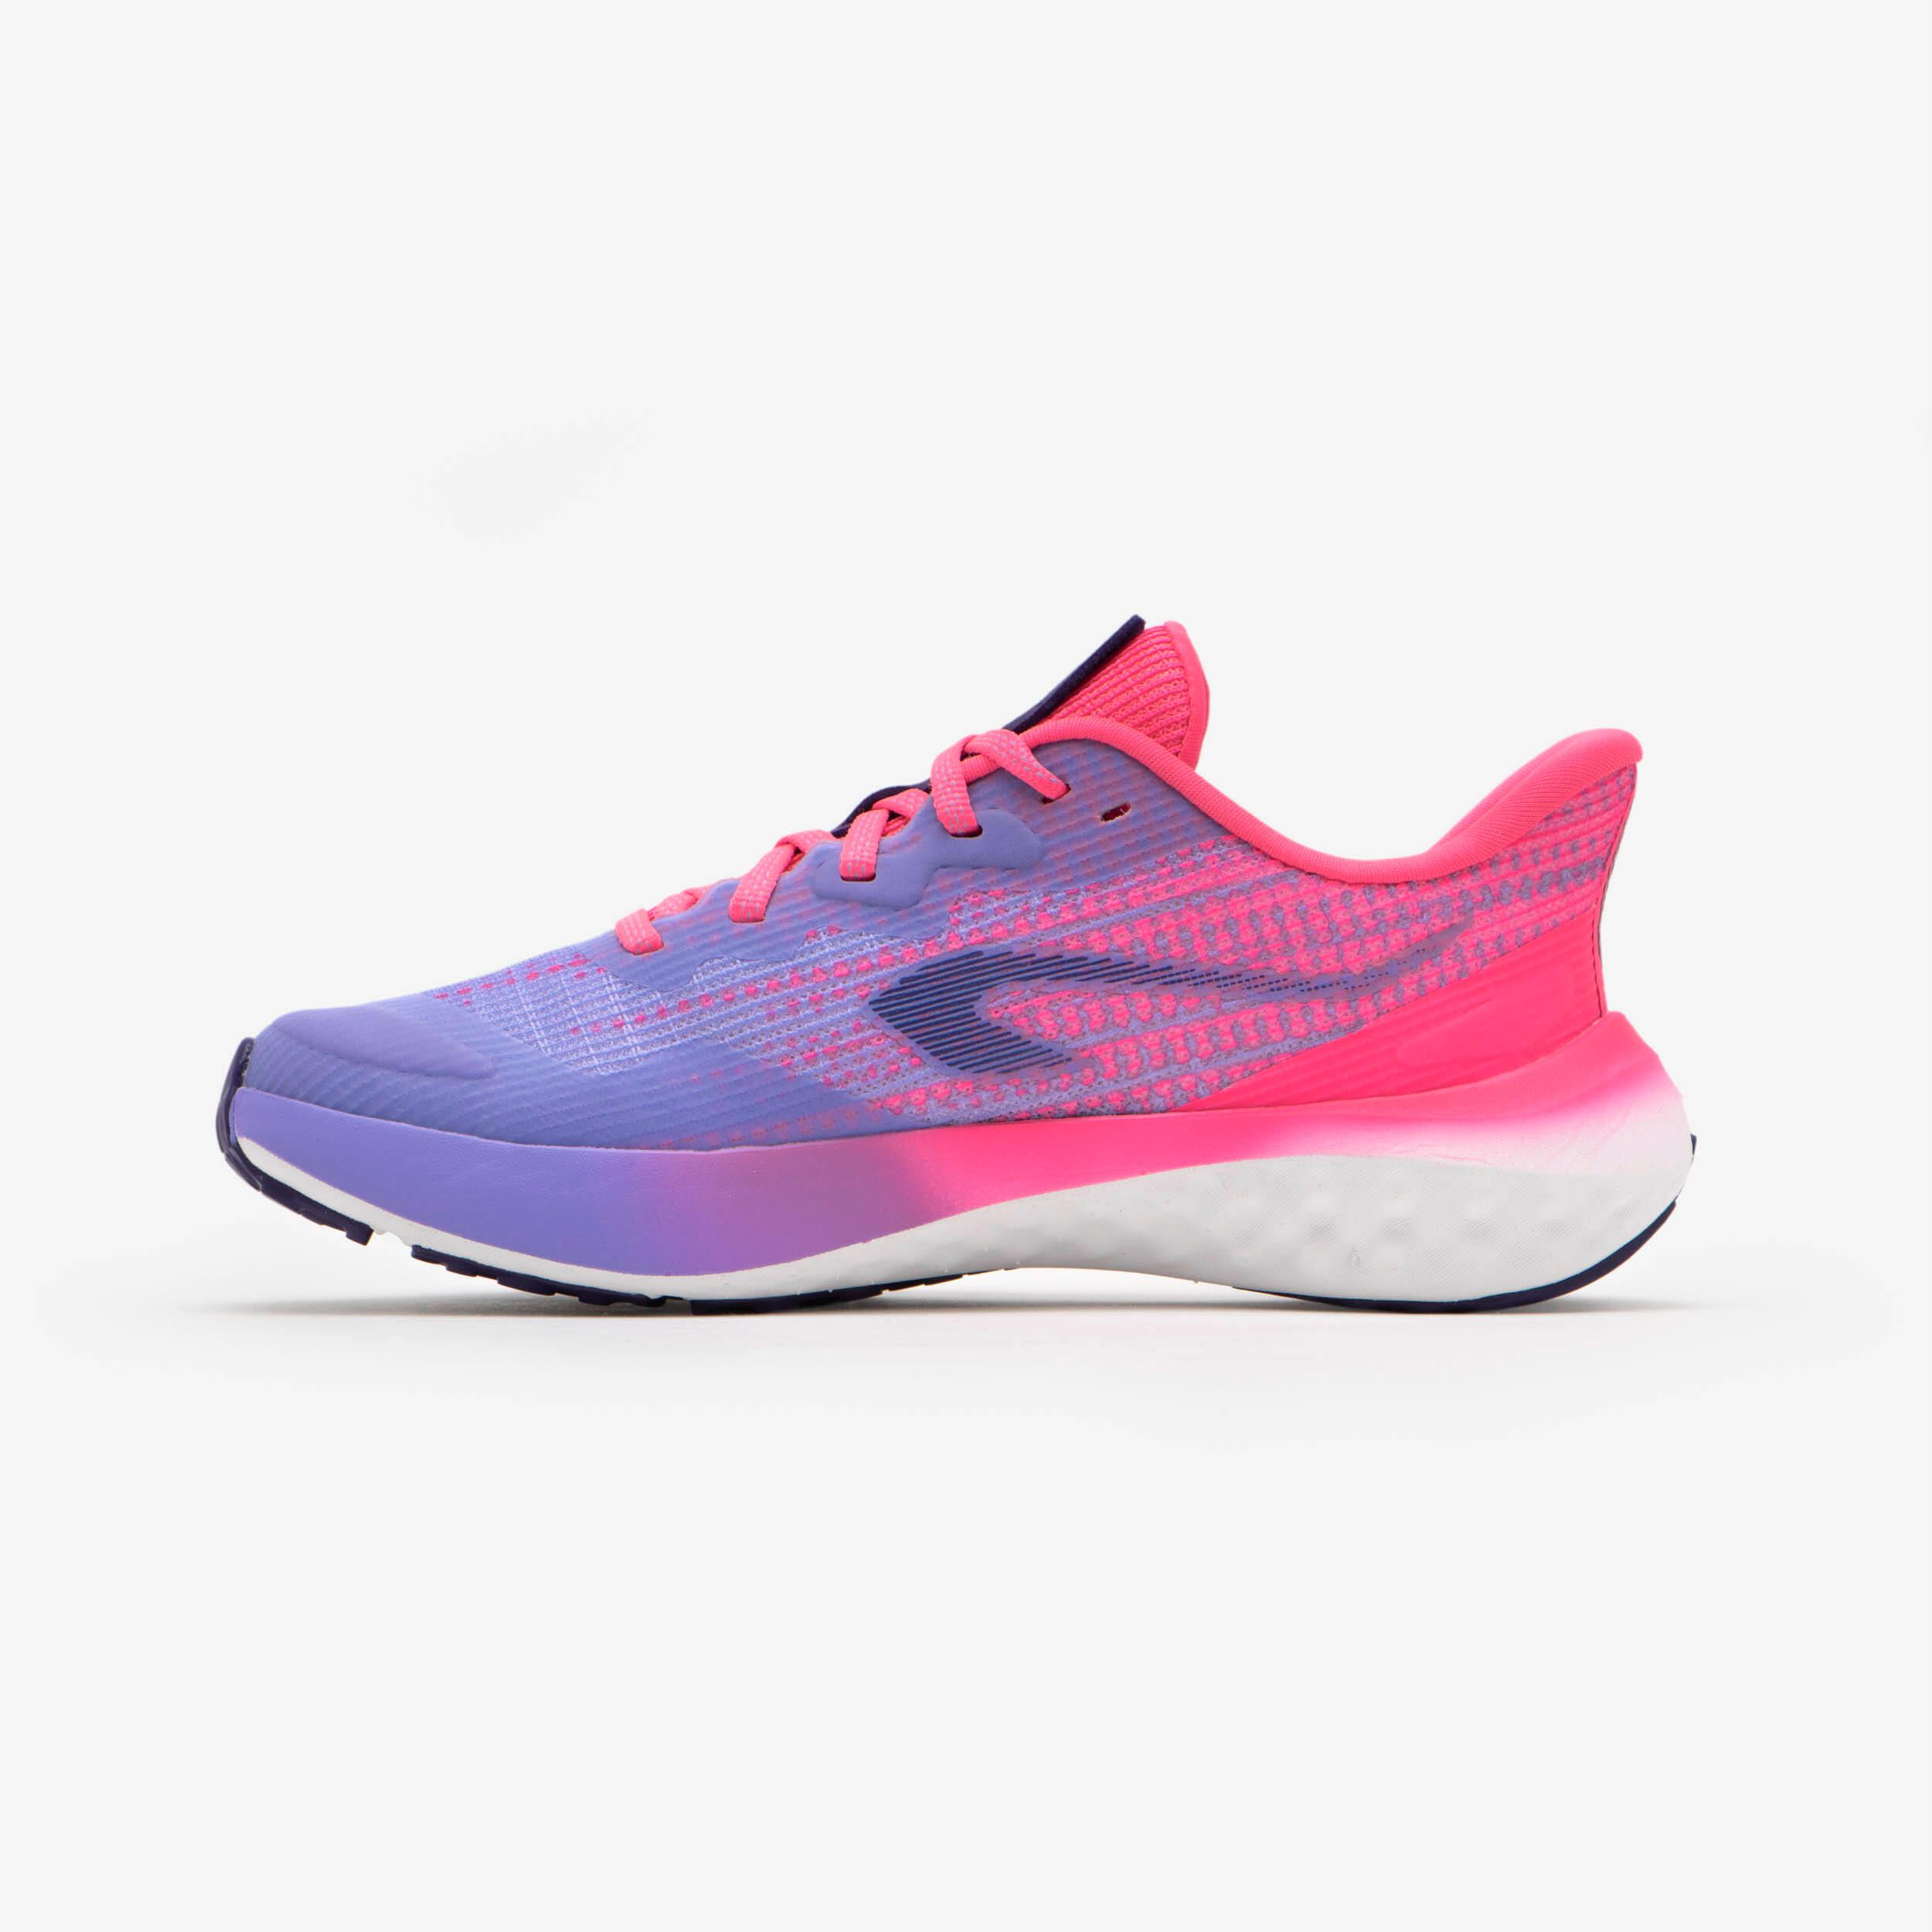 KIDS' KIPRUN K500 FAST running shoes - purple and pink 2/9